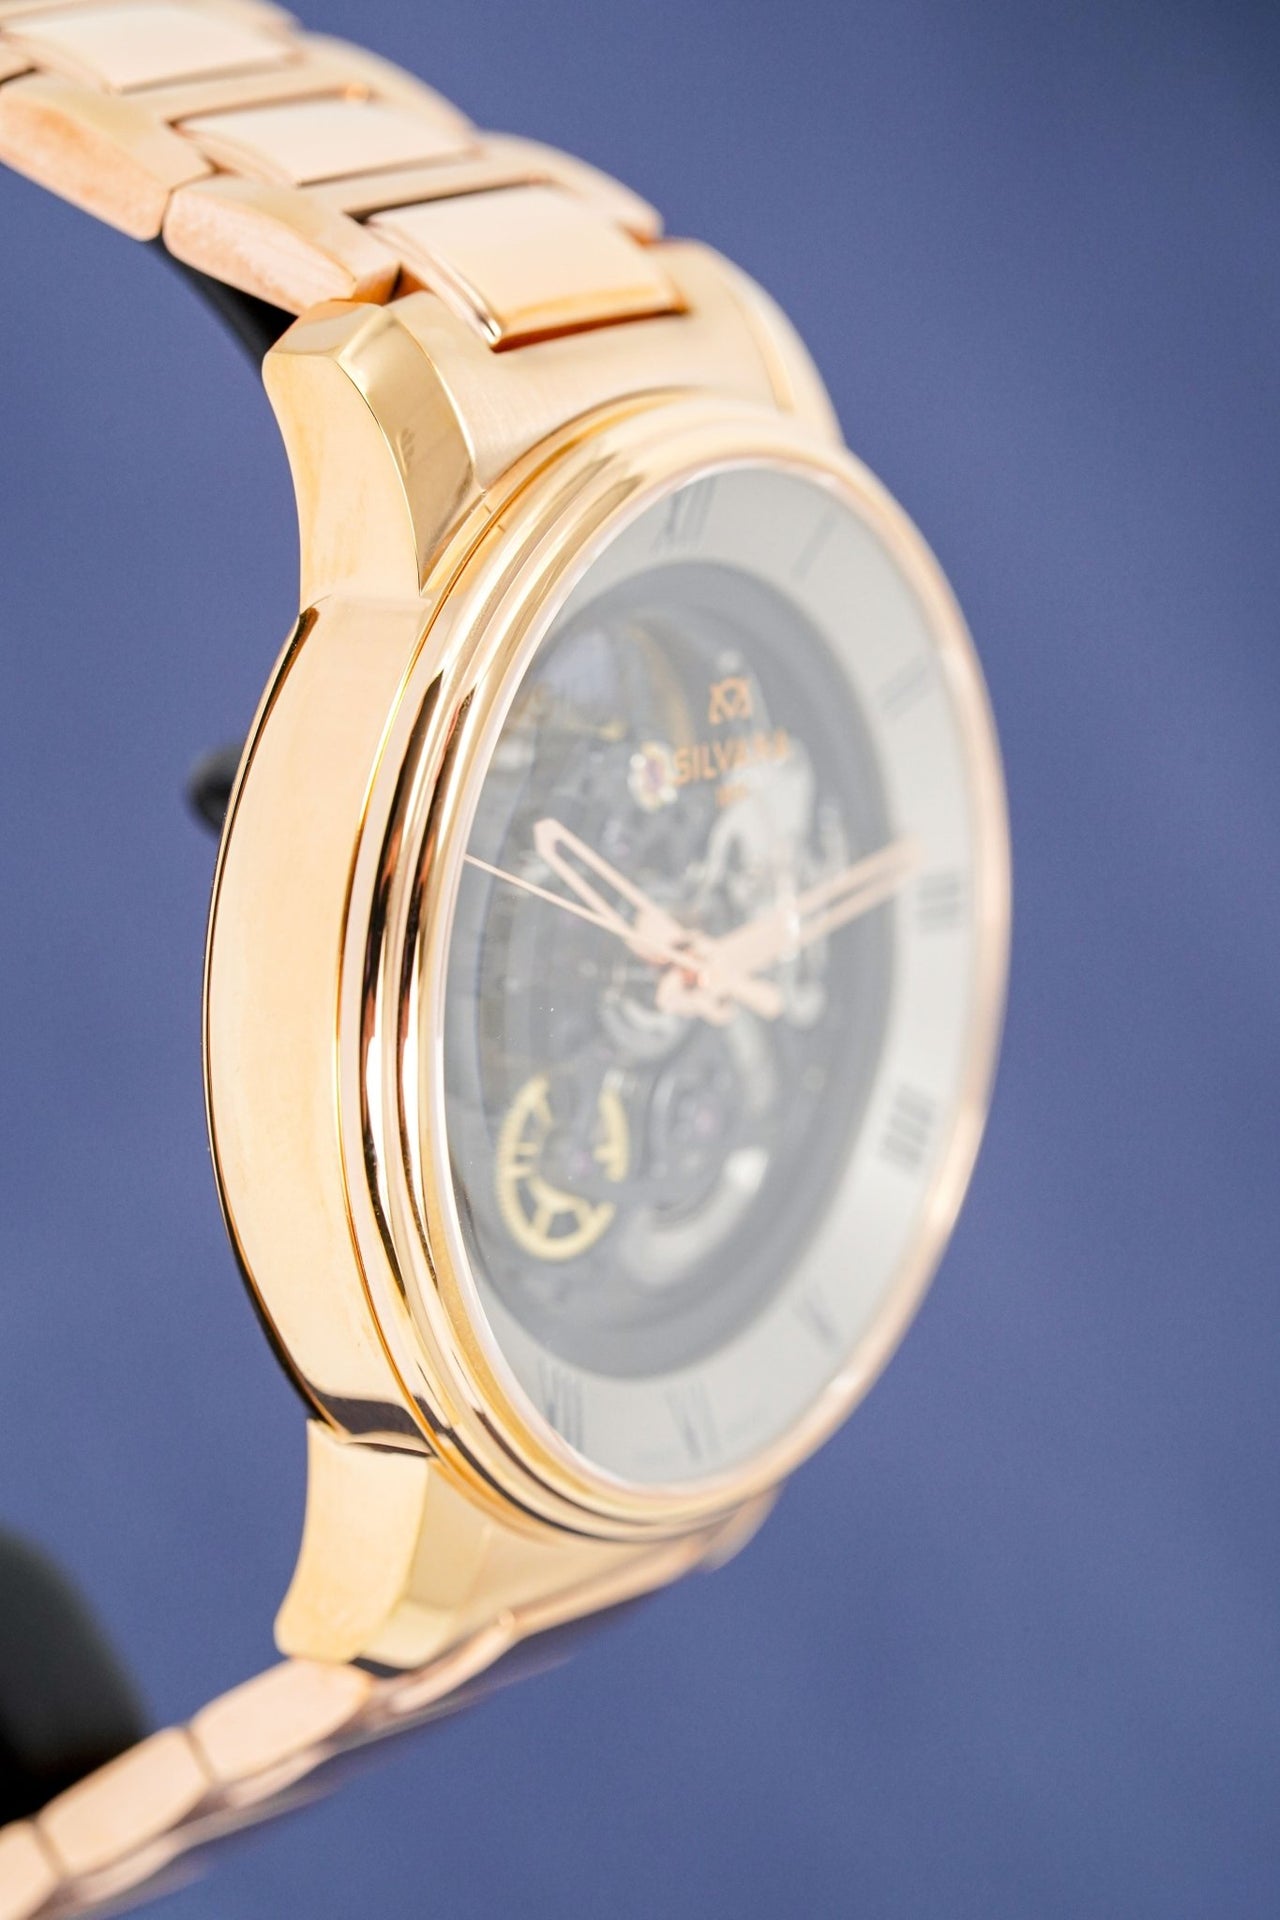 Silvana Men's Watch Black Origins Rose Gold PVD SR41ARR63R - Watches & Crystals